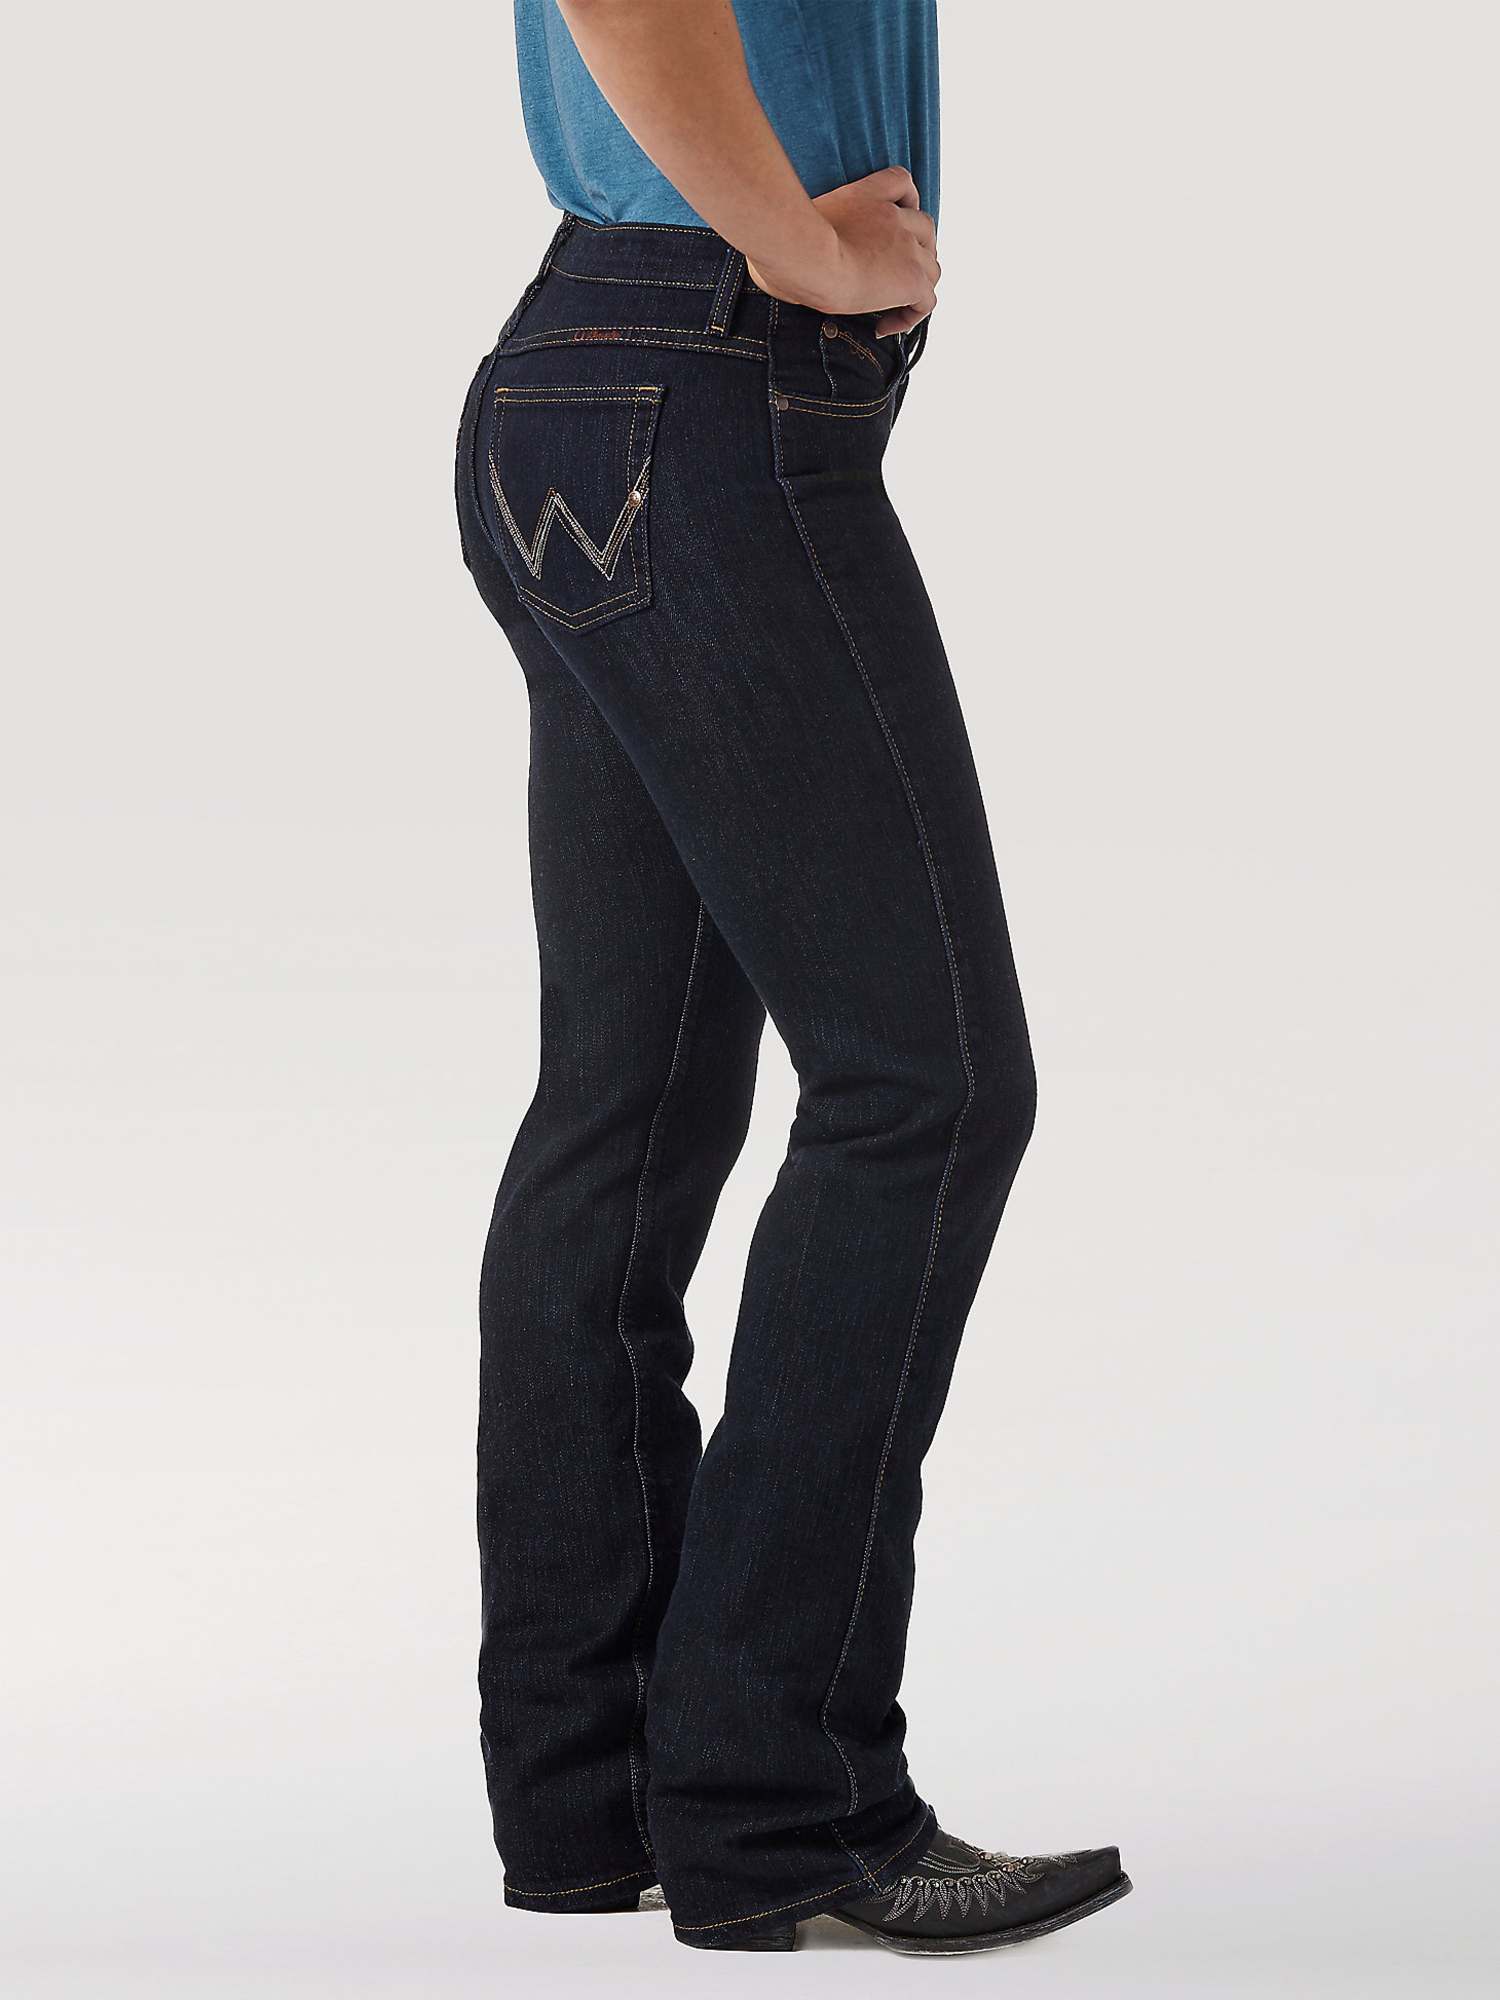 Product Name: Wrangler Women's Light Wash Destructed Loose Flare Jeans